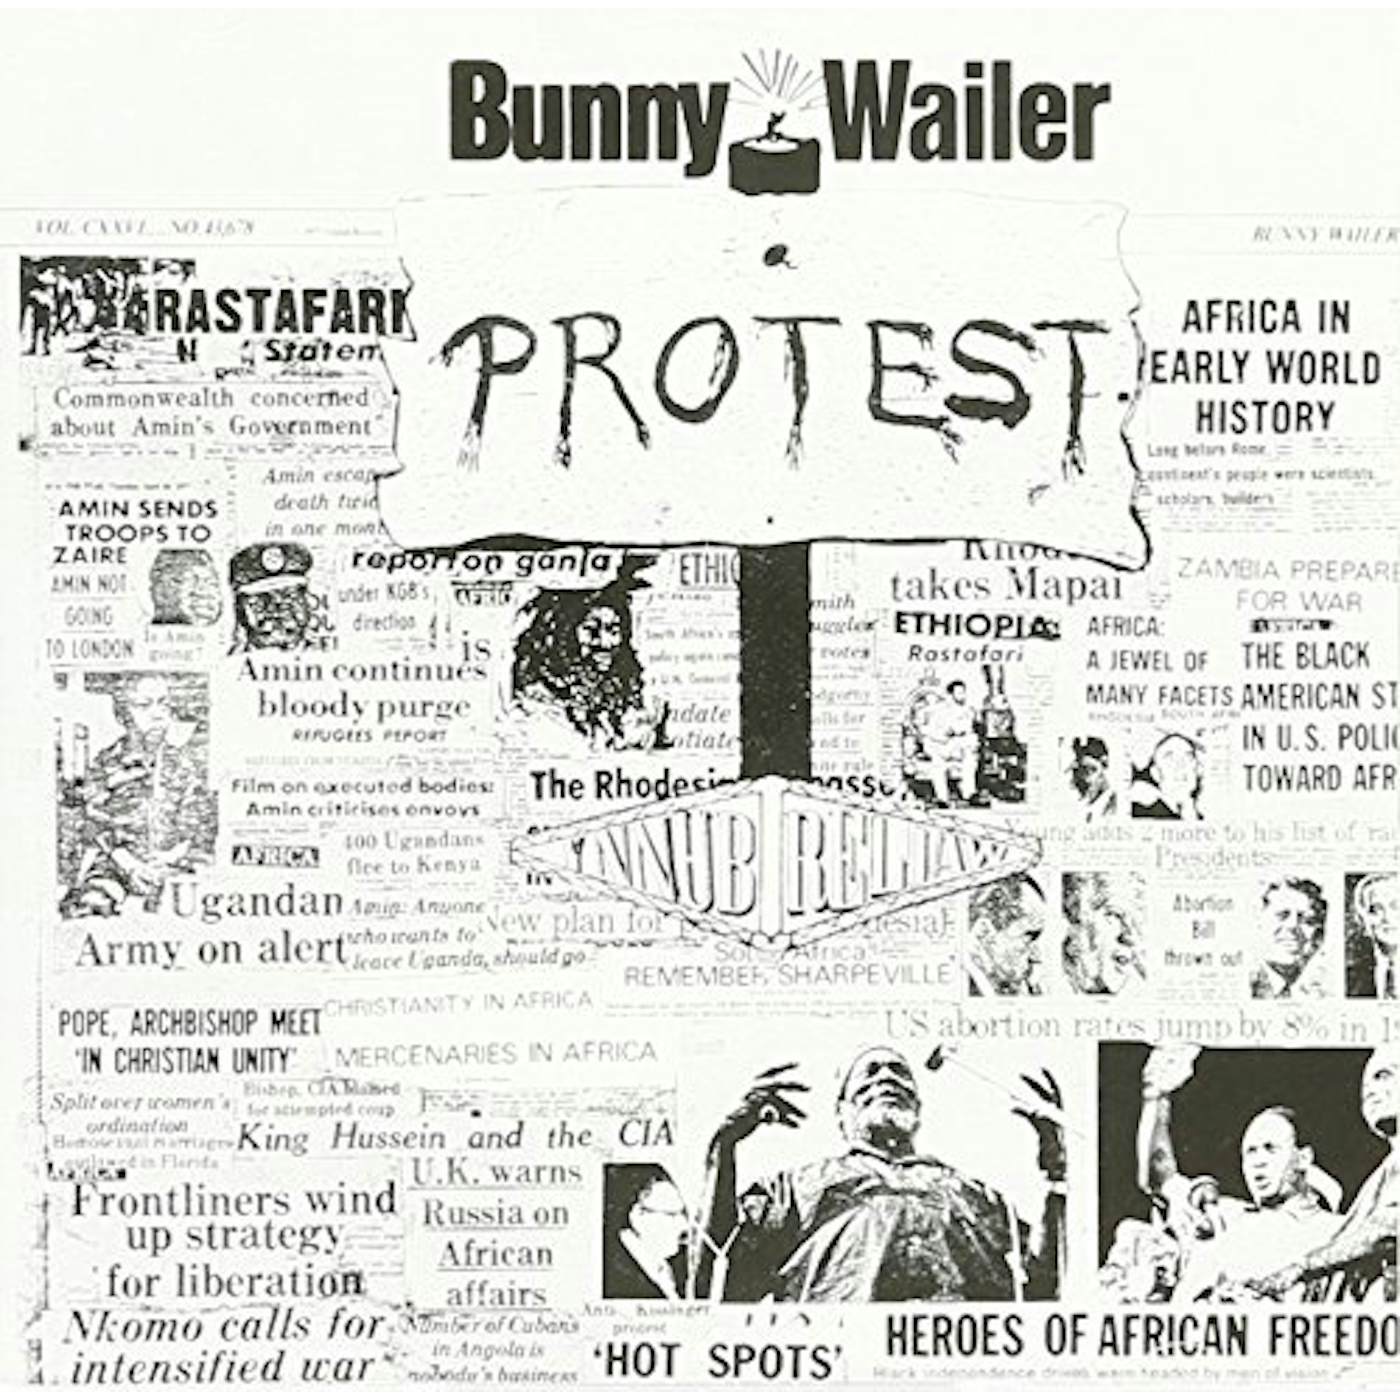 Bunny Wailer PROTEST CD